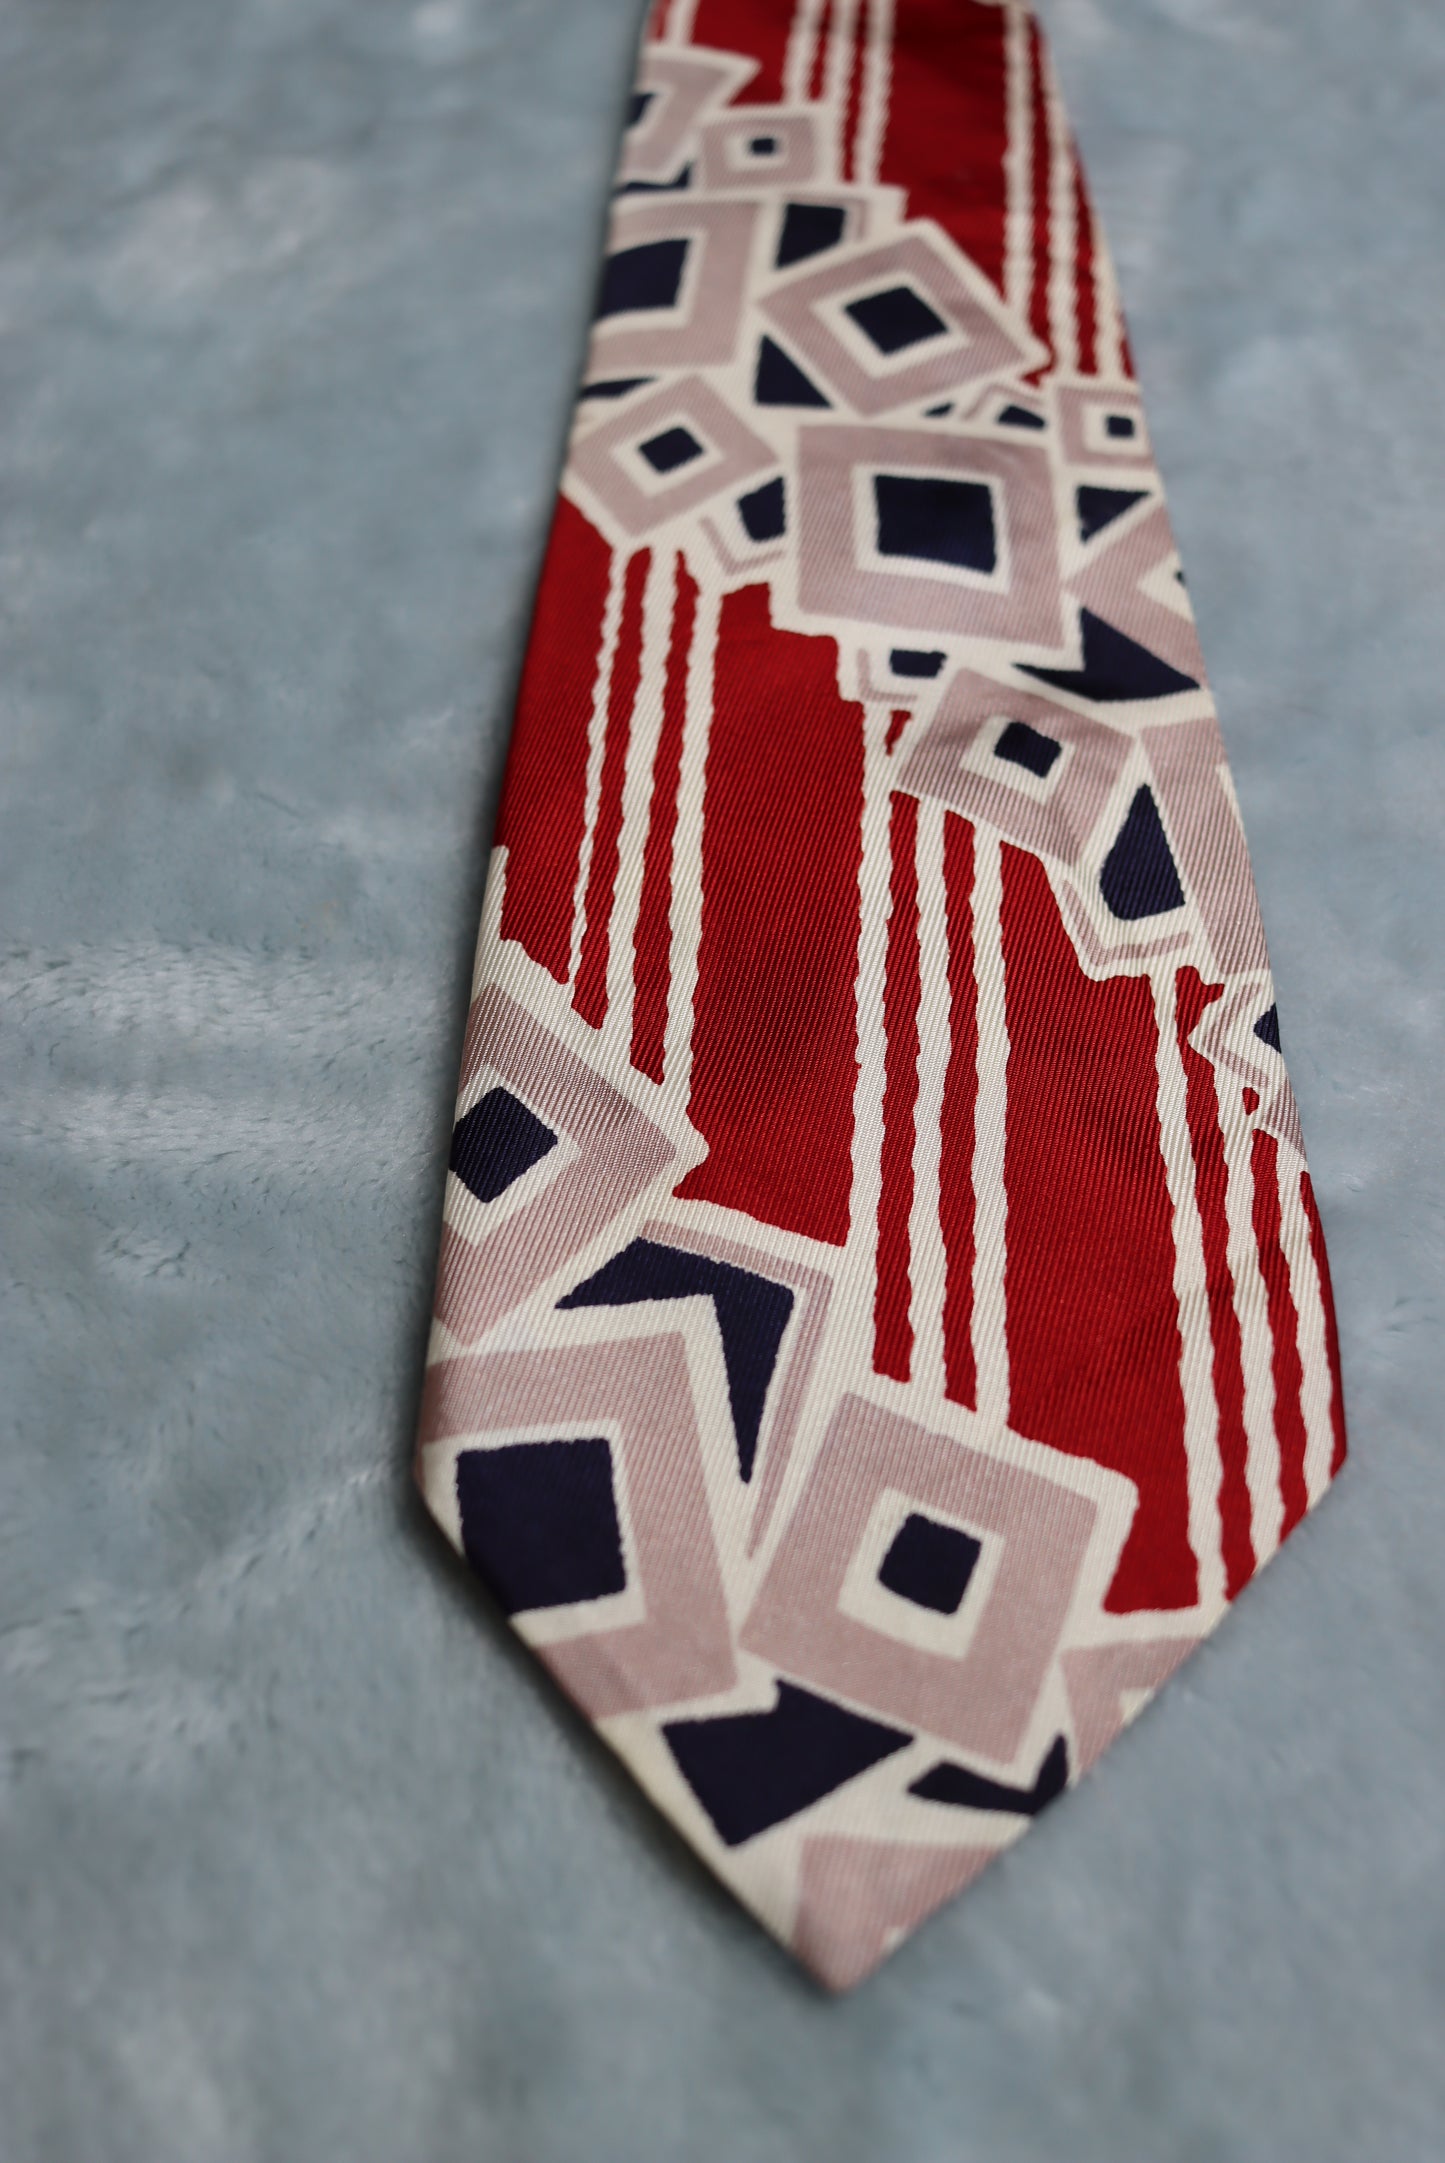 Vintage 1940s/50s Pilgrim Cravats Geometric Pattern Swing Tie